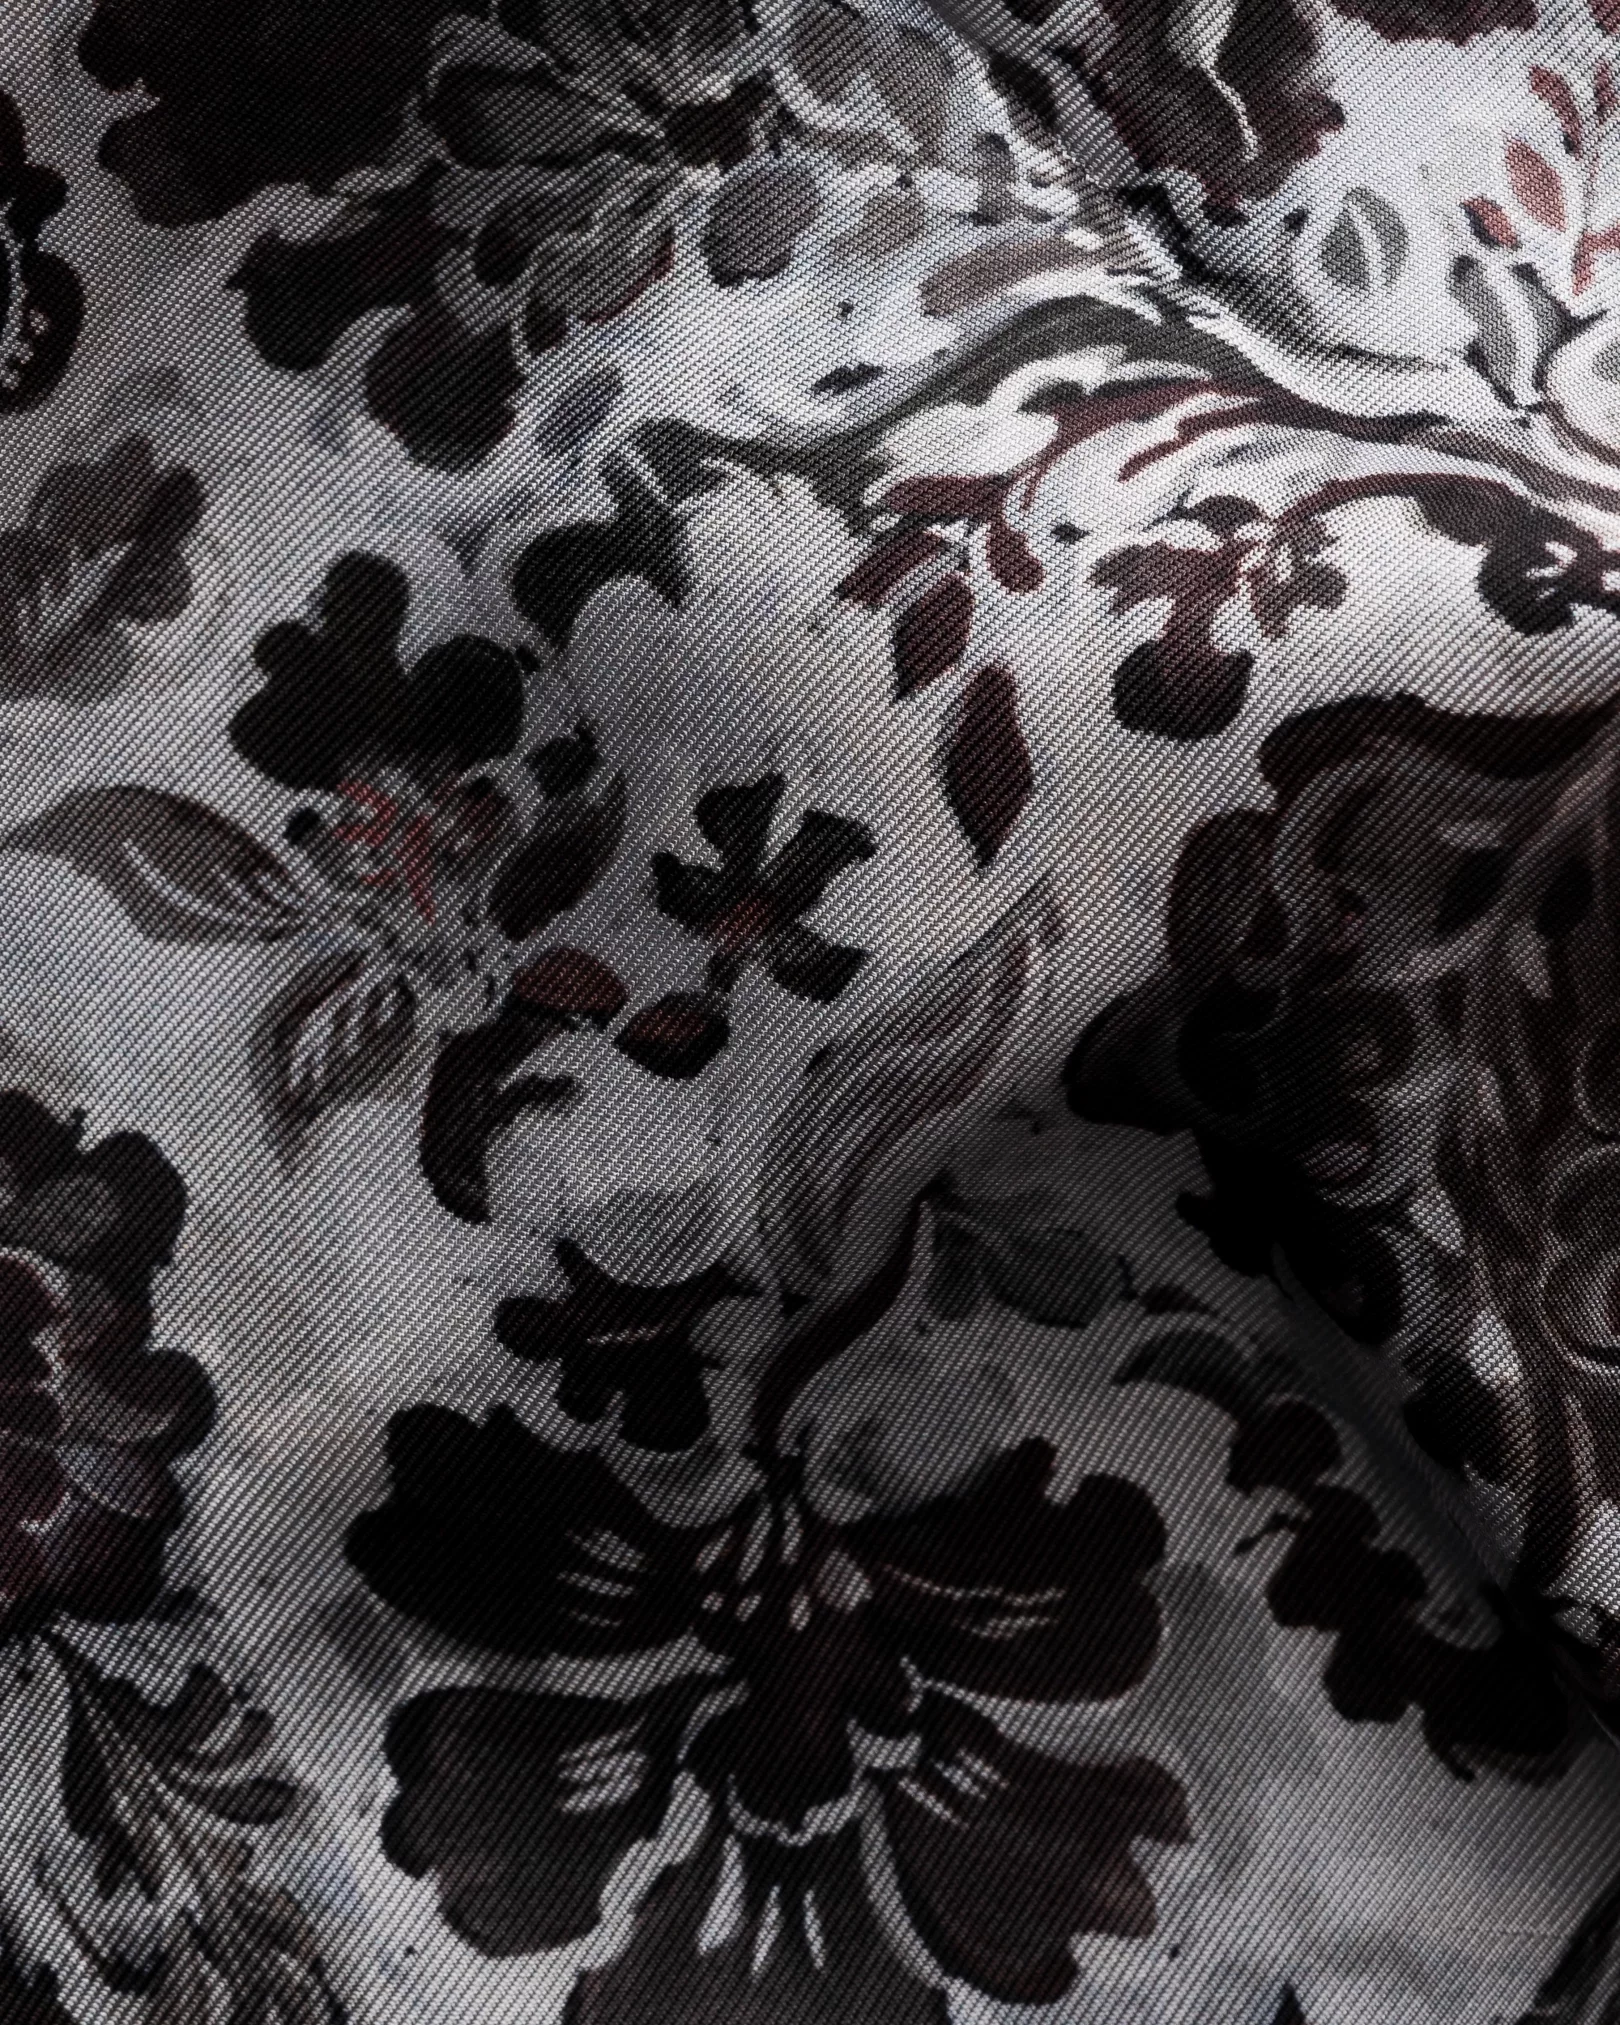 Eton - floral silk shirt